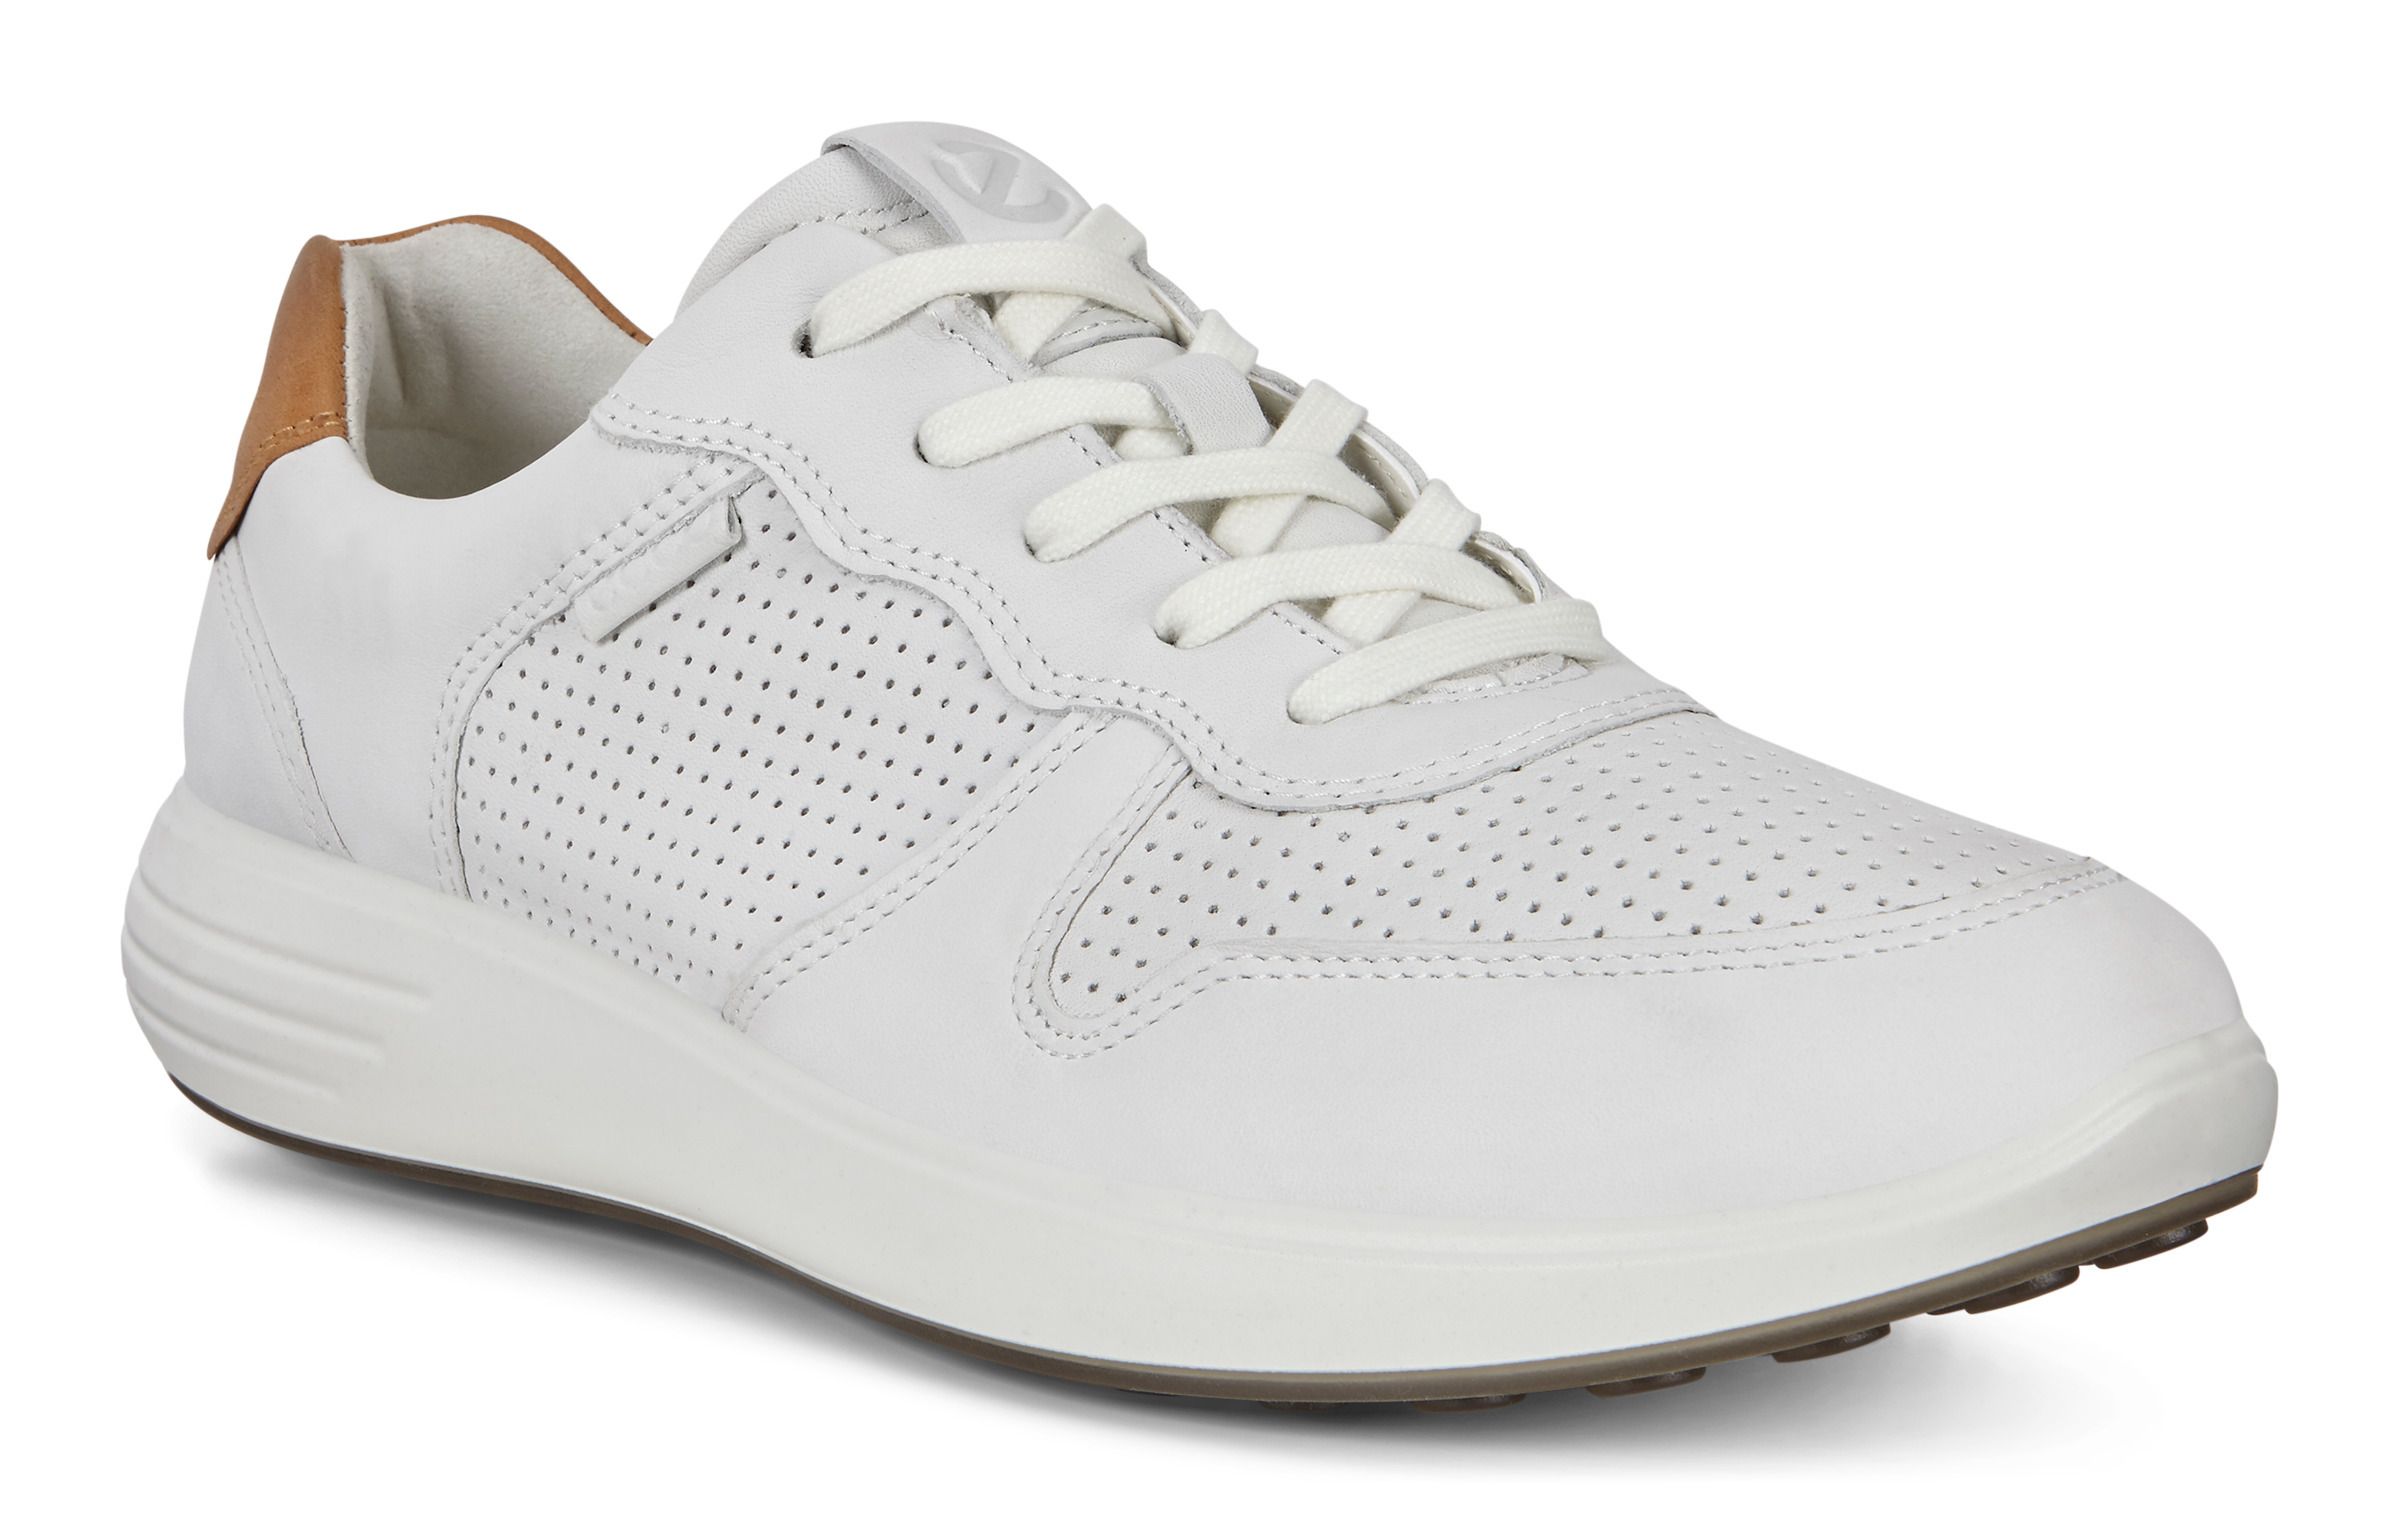 ecco white tennis shoes